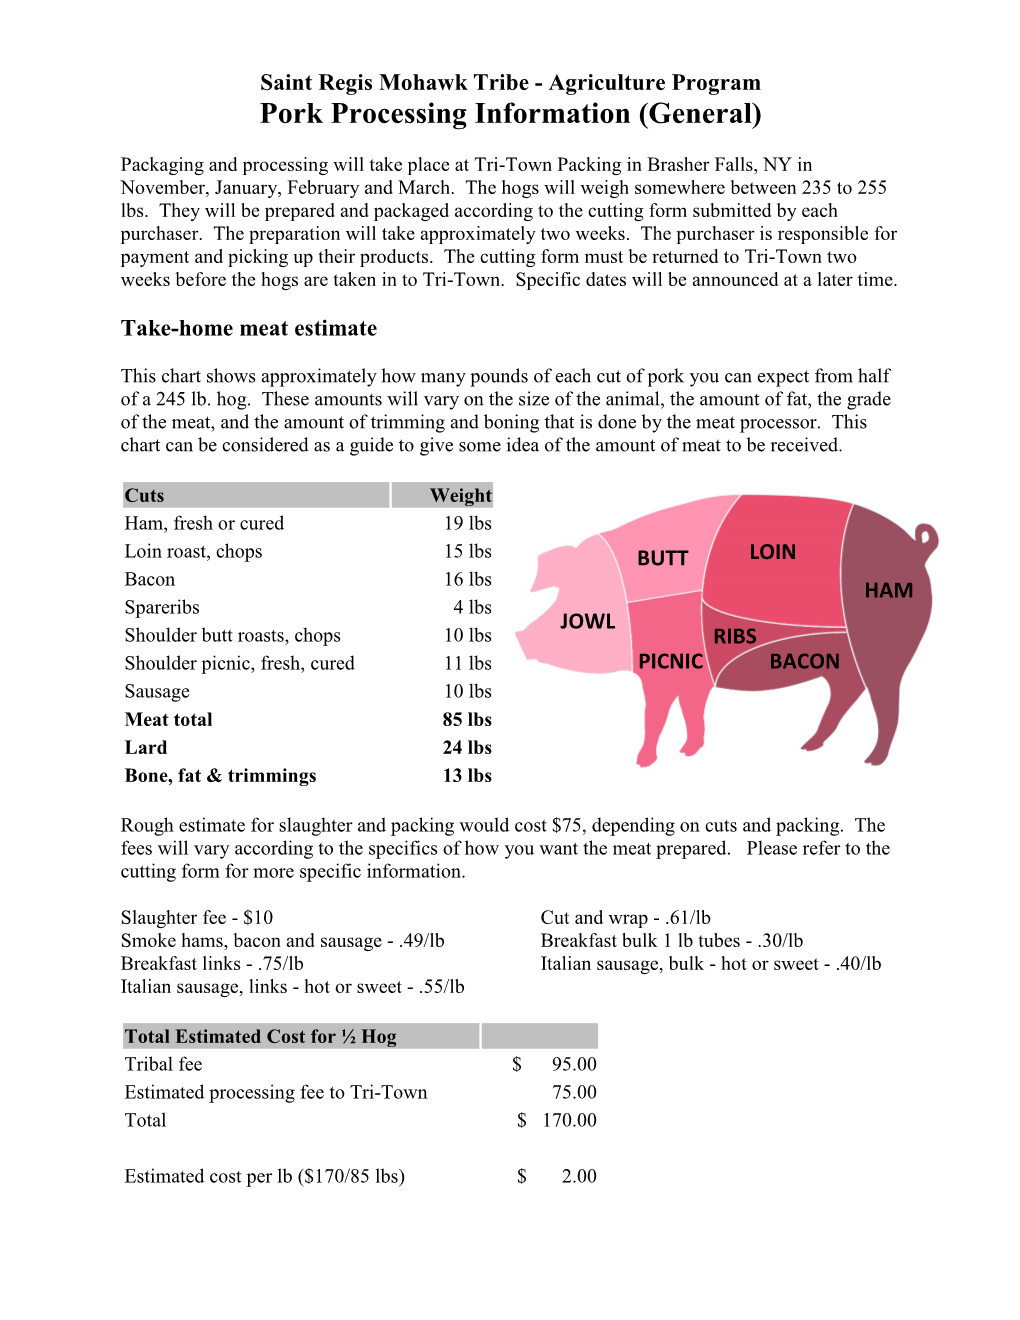 Pork Processing Information (General)